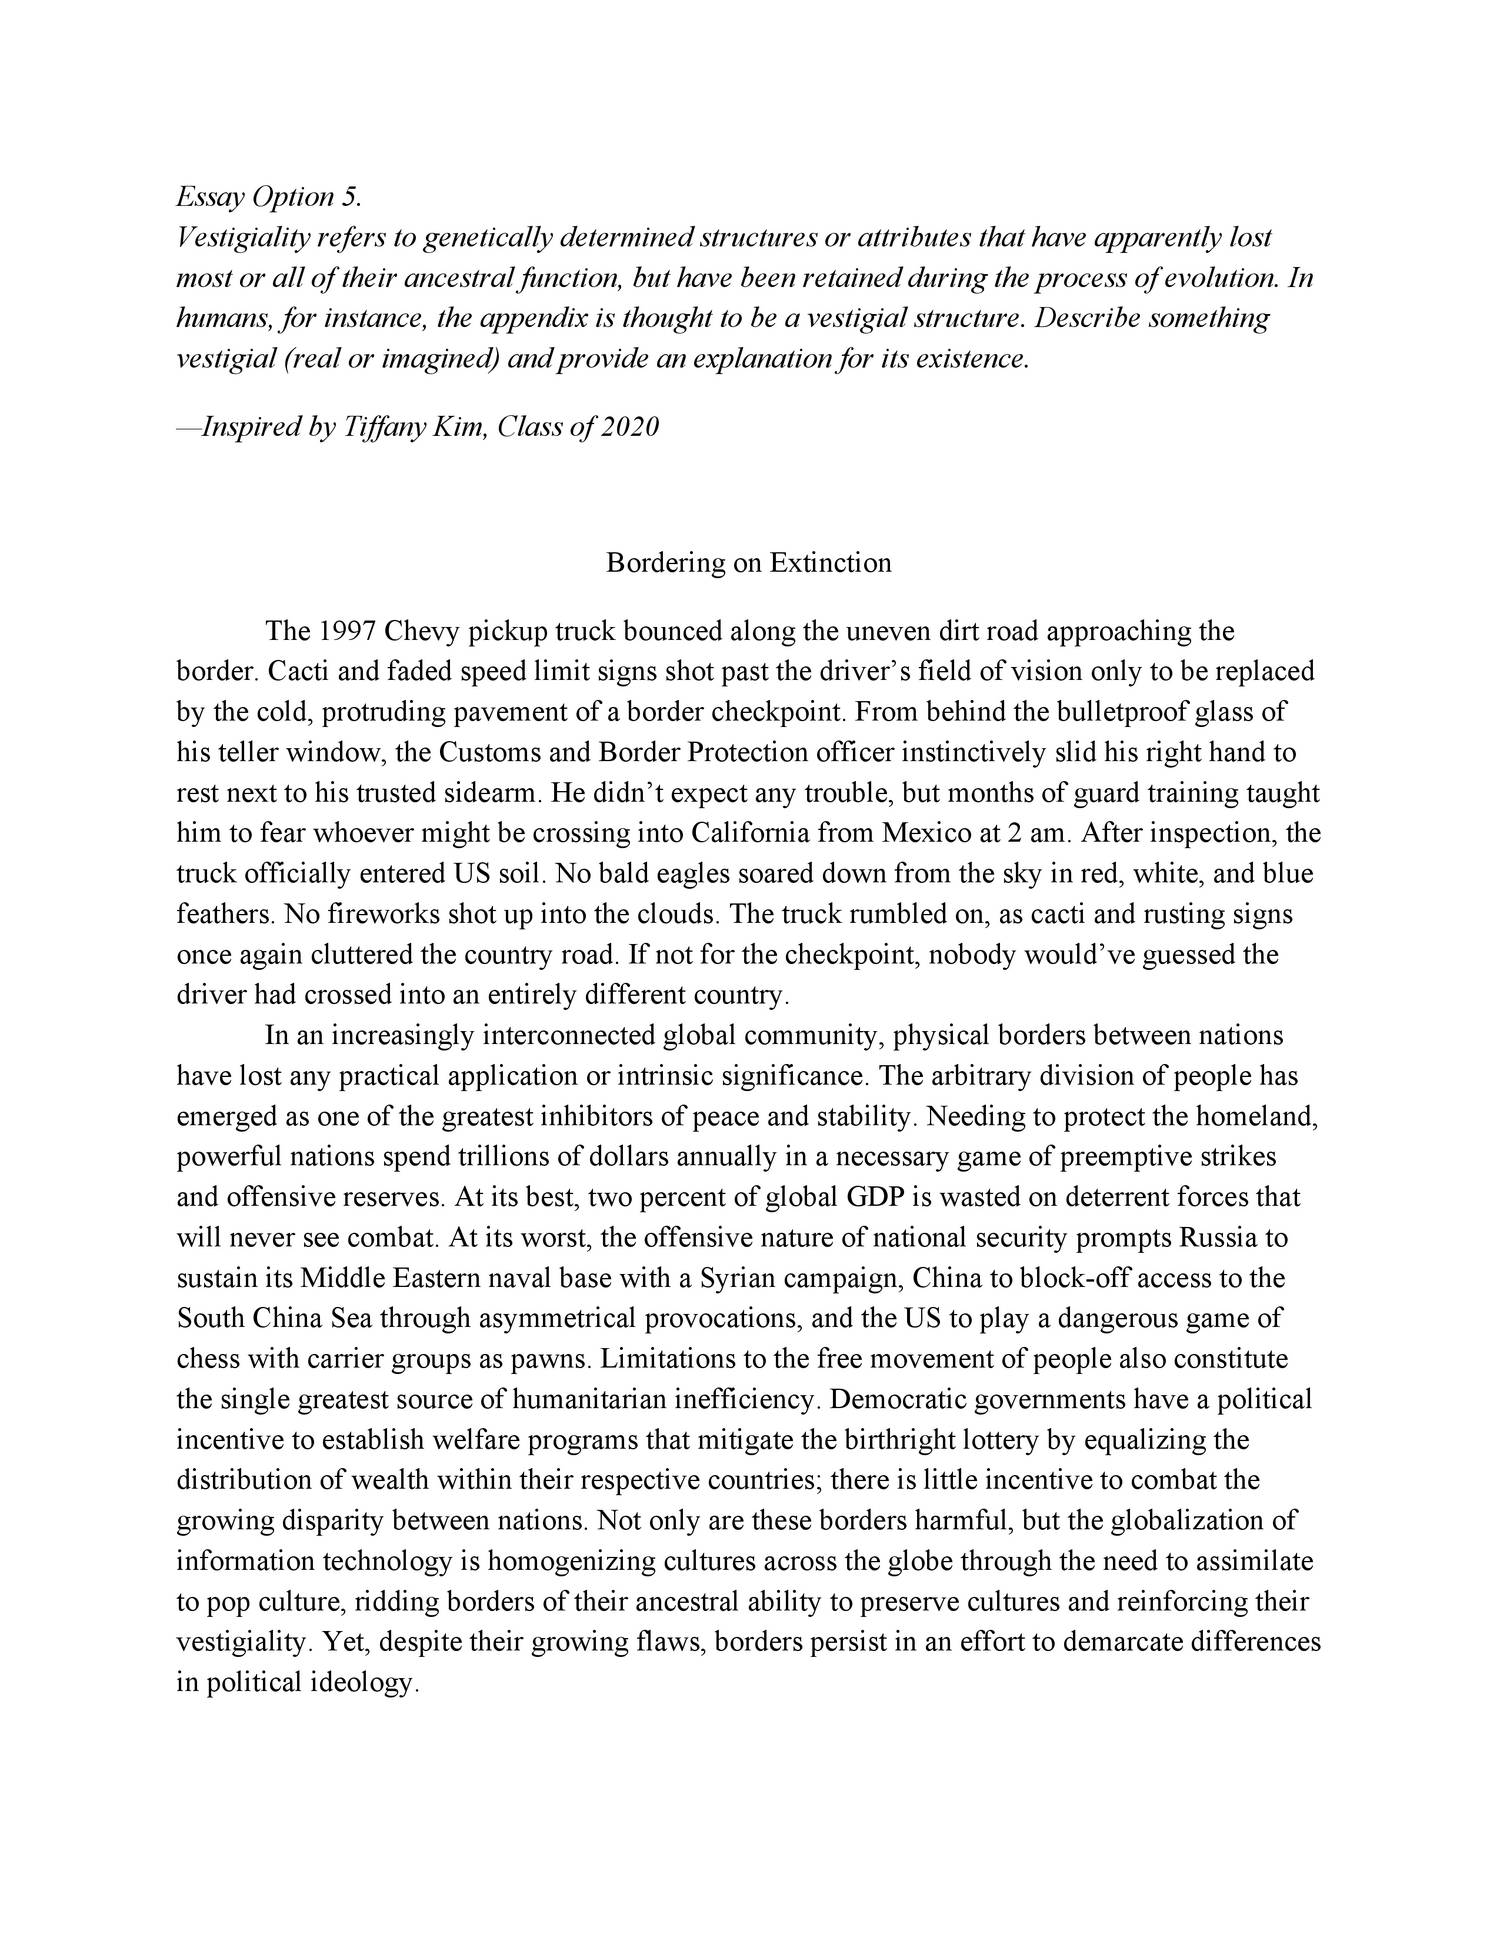 Ben's UChicago Extended Essay.pdf DocDroid